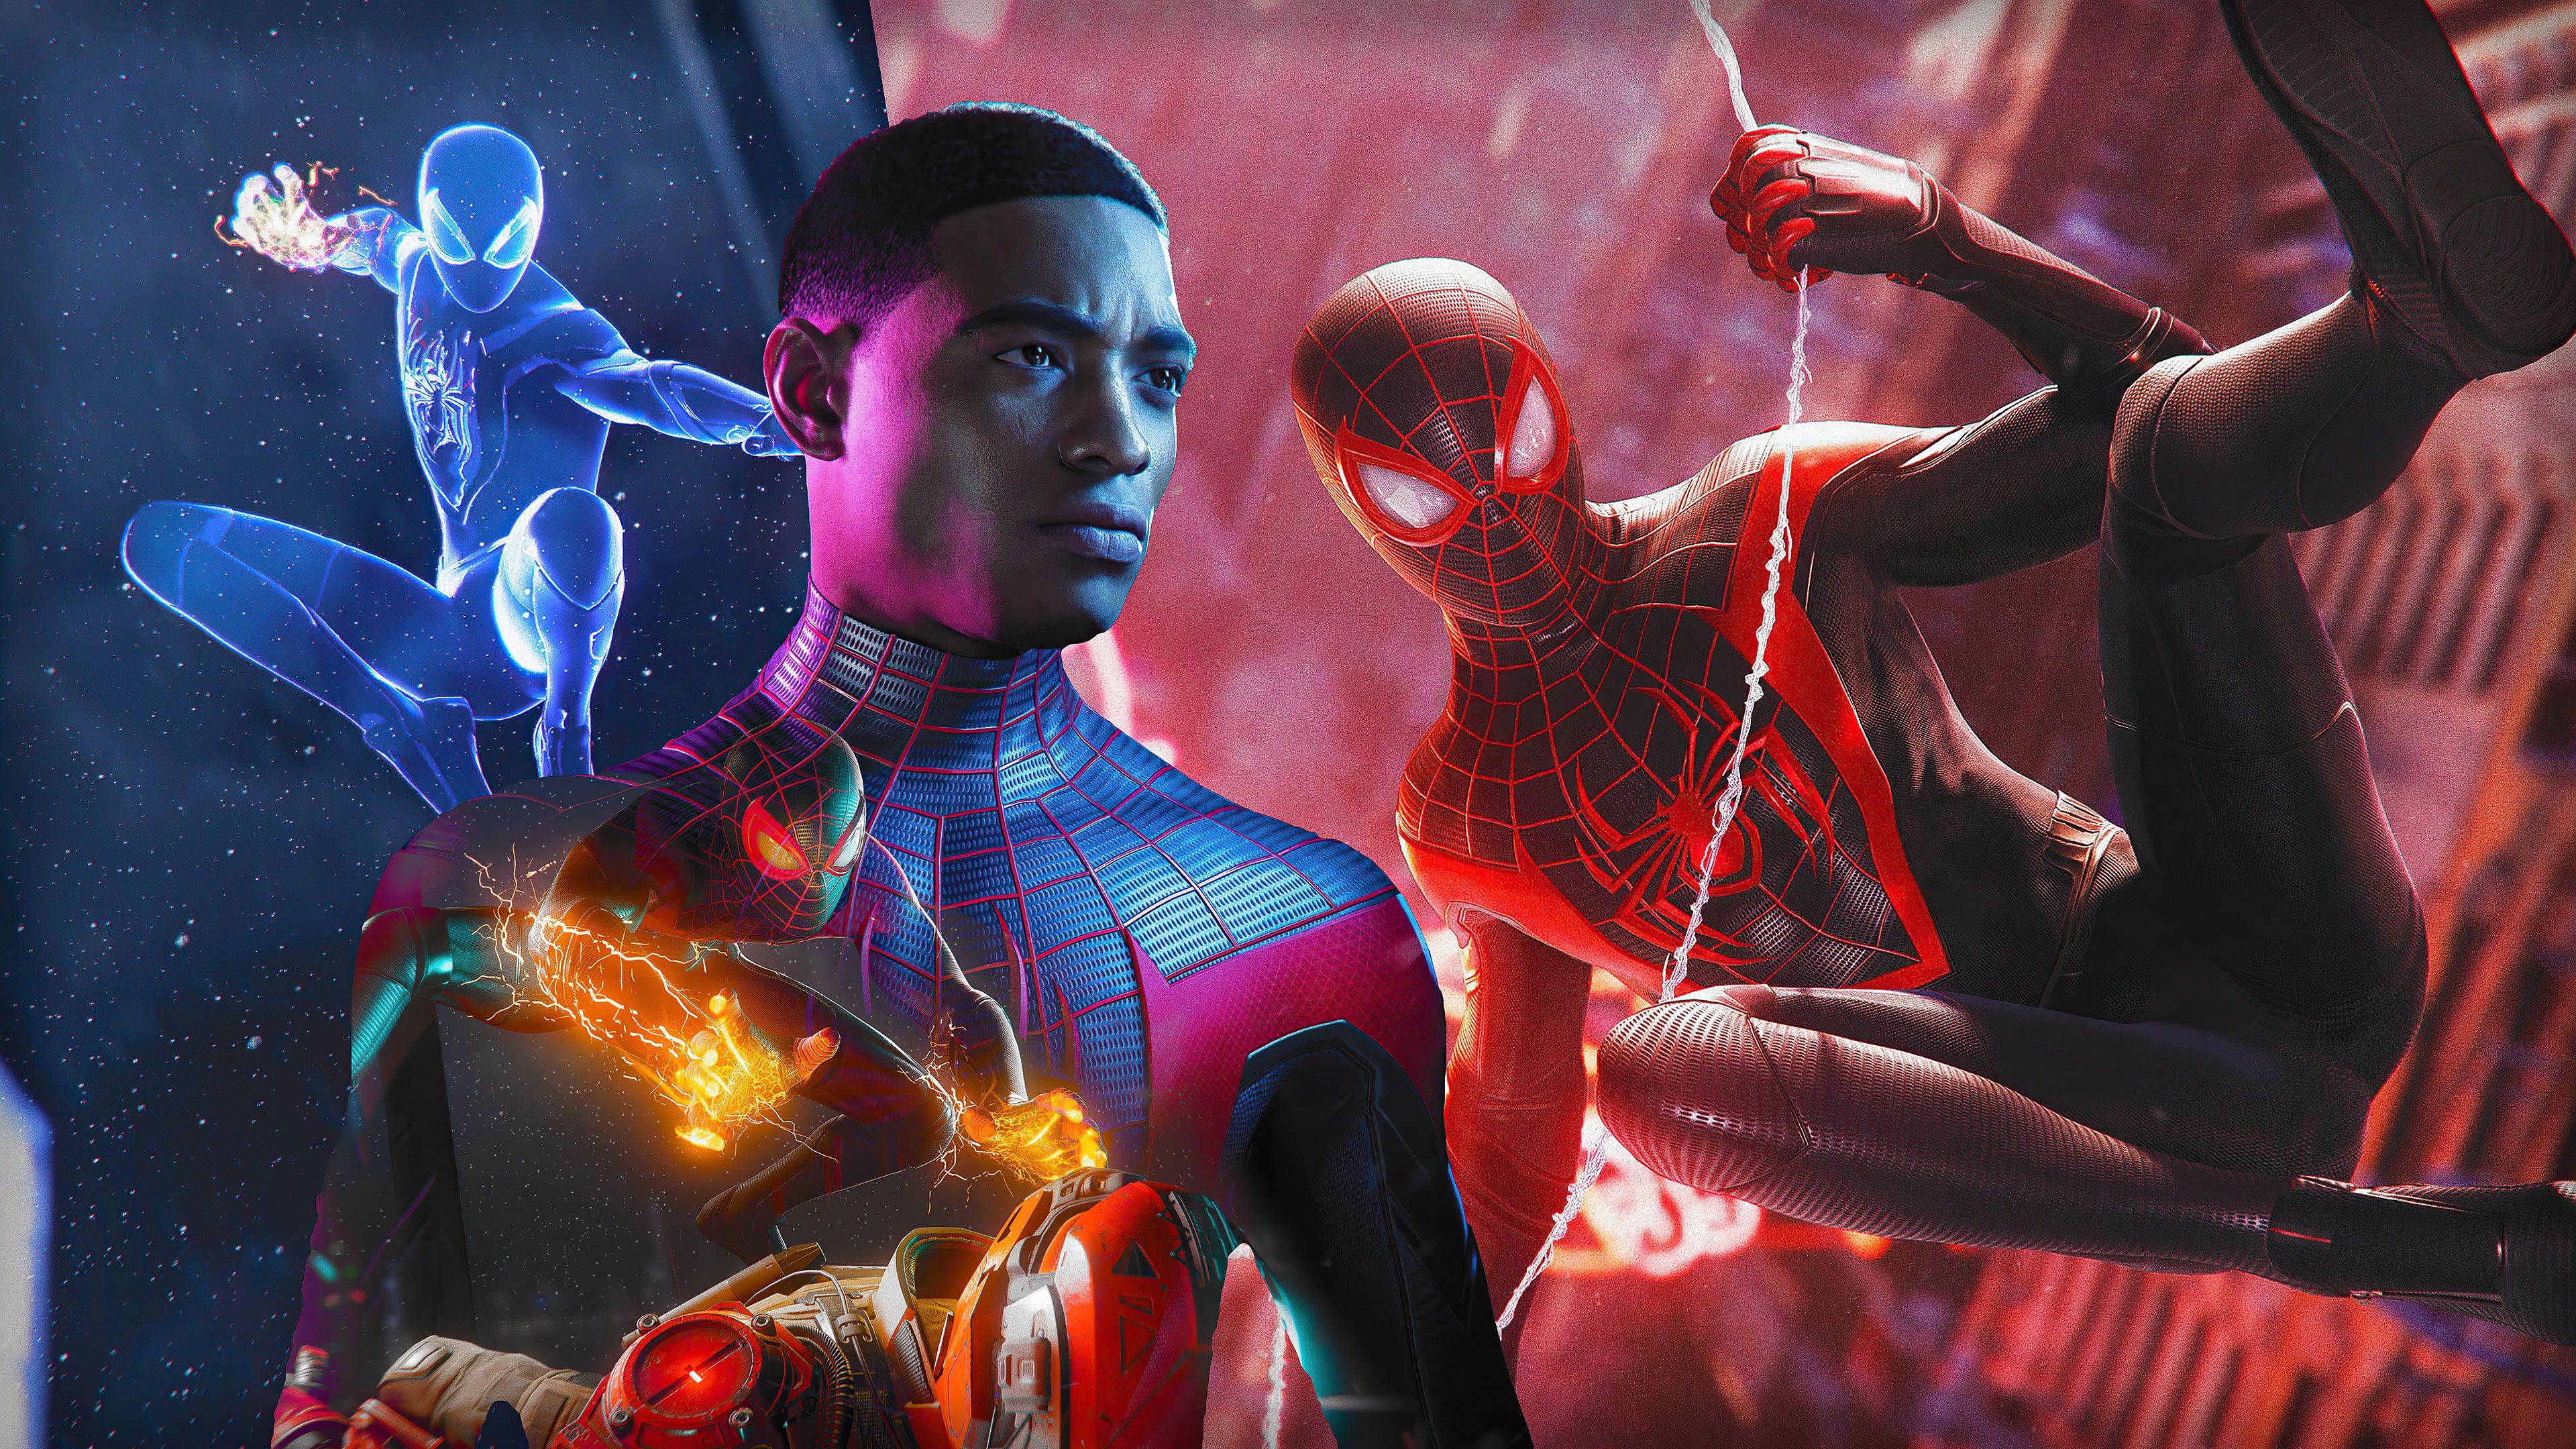 Spider Man Miles Morales Marvel Art Wallpaper, HD Games 4K Wallpaper, Image, Photo And Background